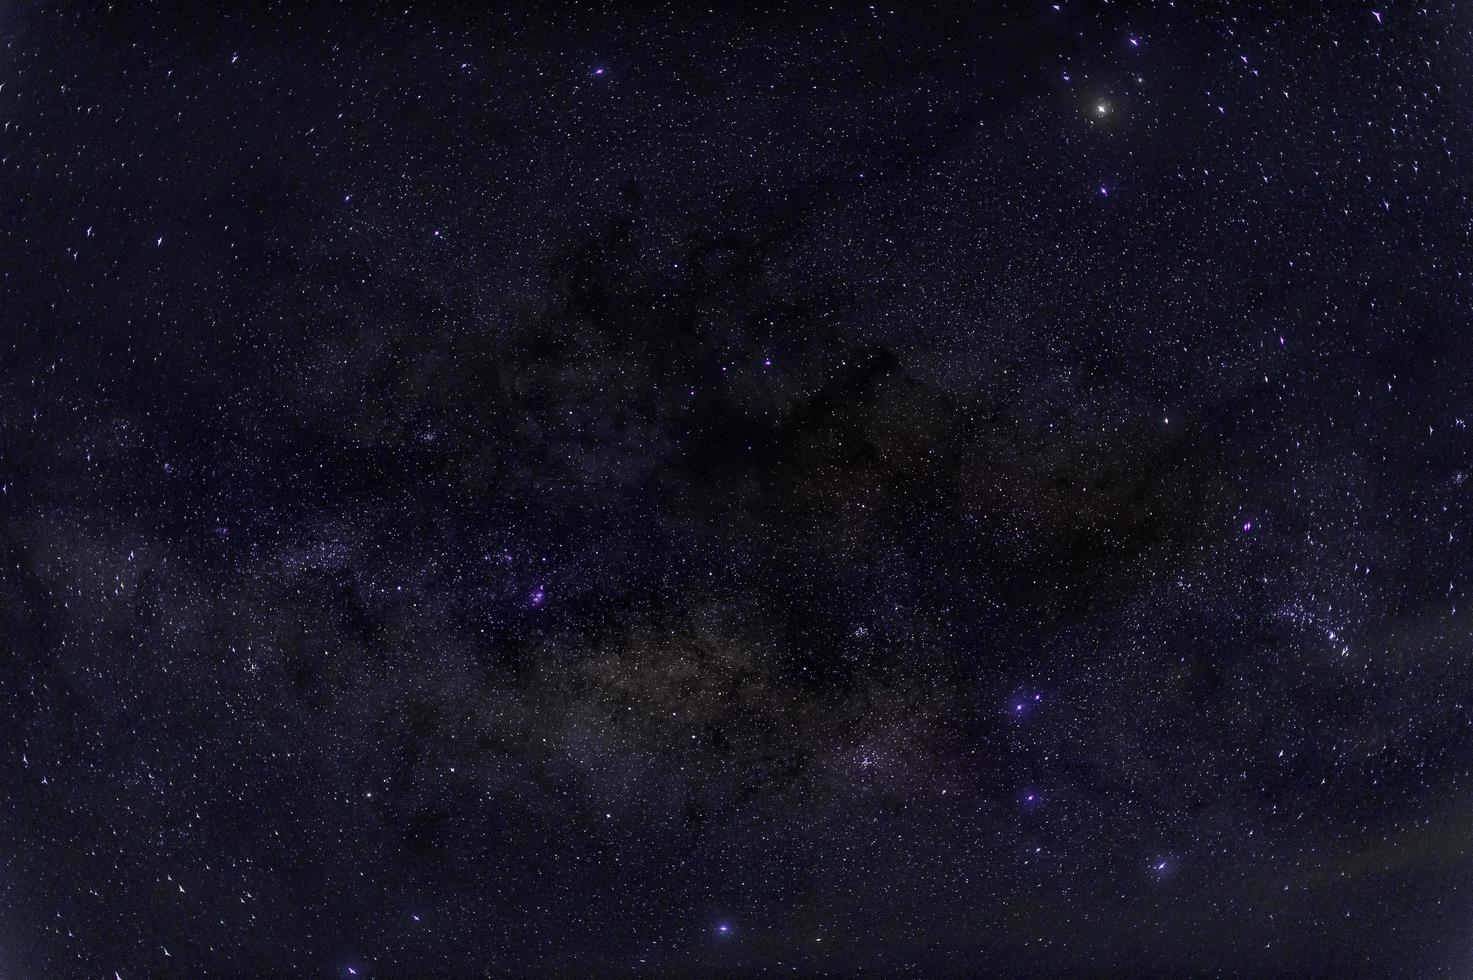 Sterne der Milchstraße foto